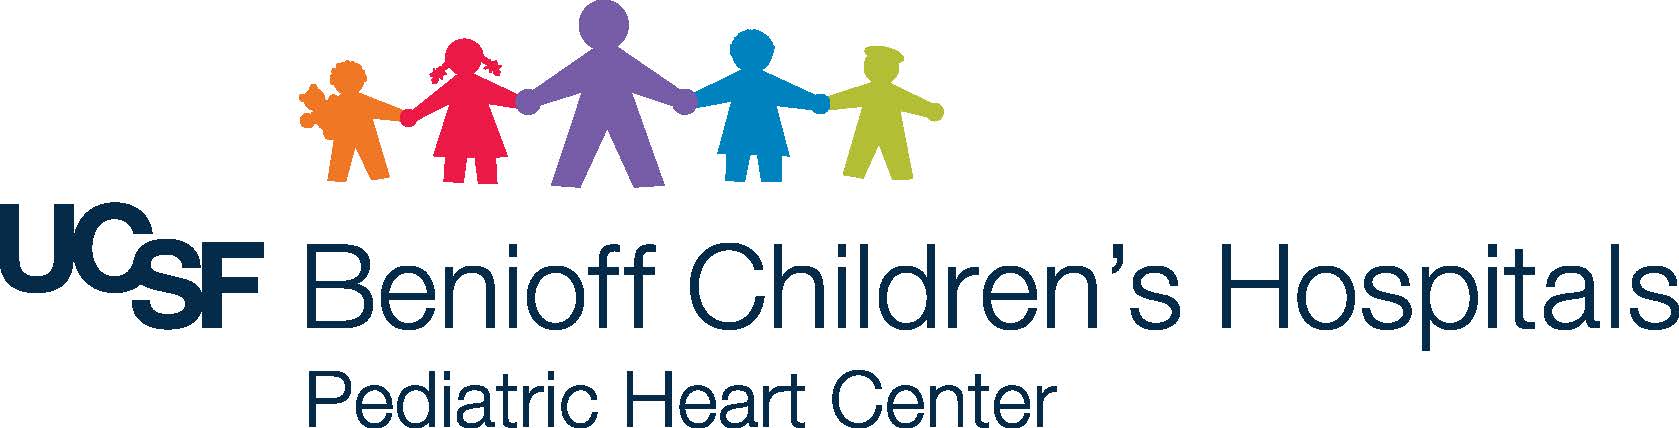 UCSF Benioff Children's Hospitals Pediatric Heart Center